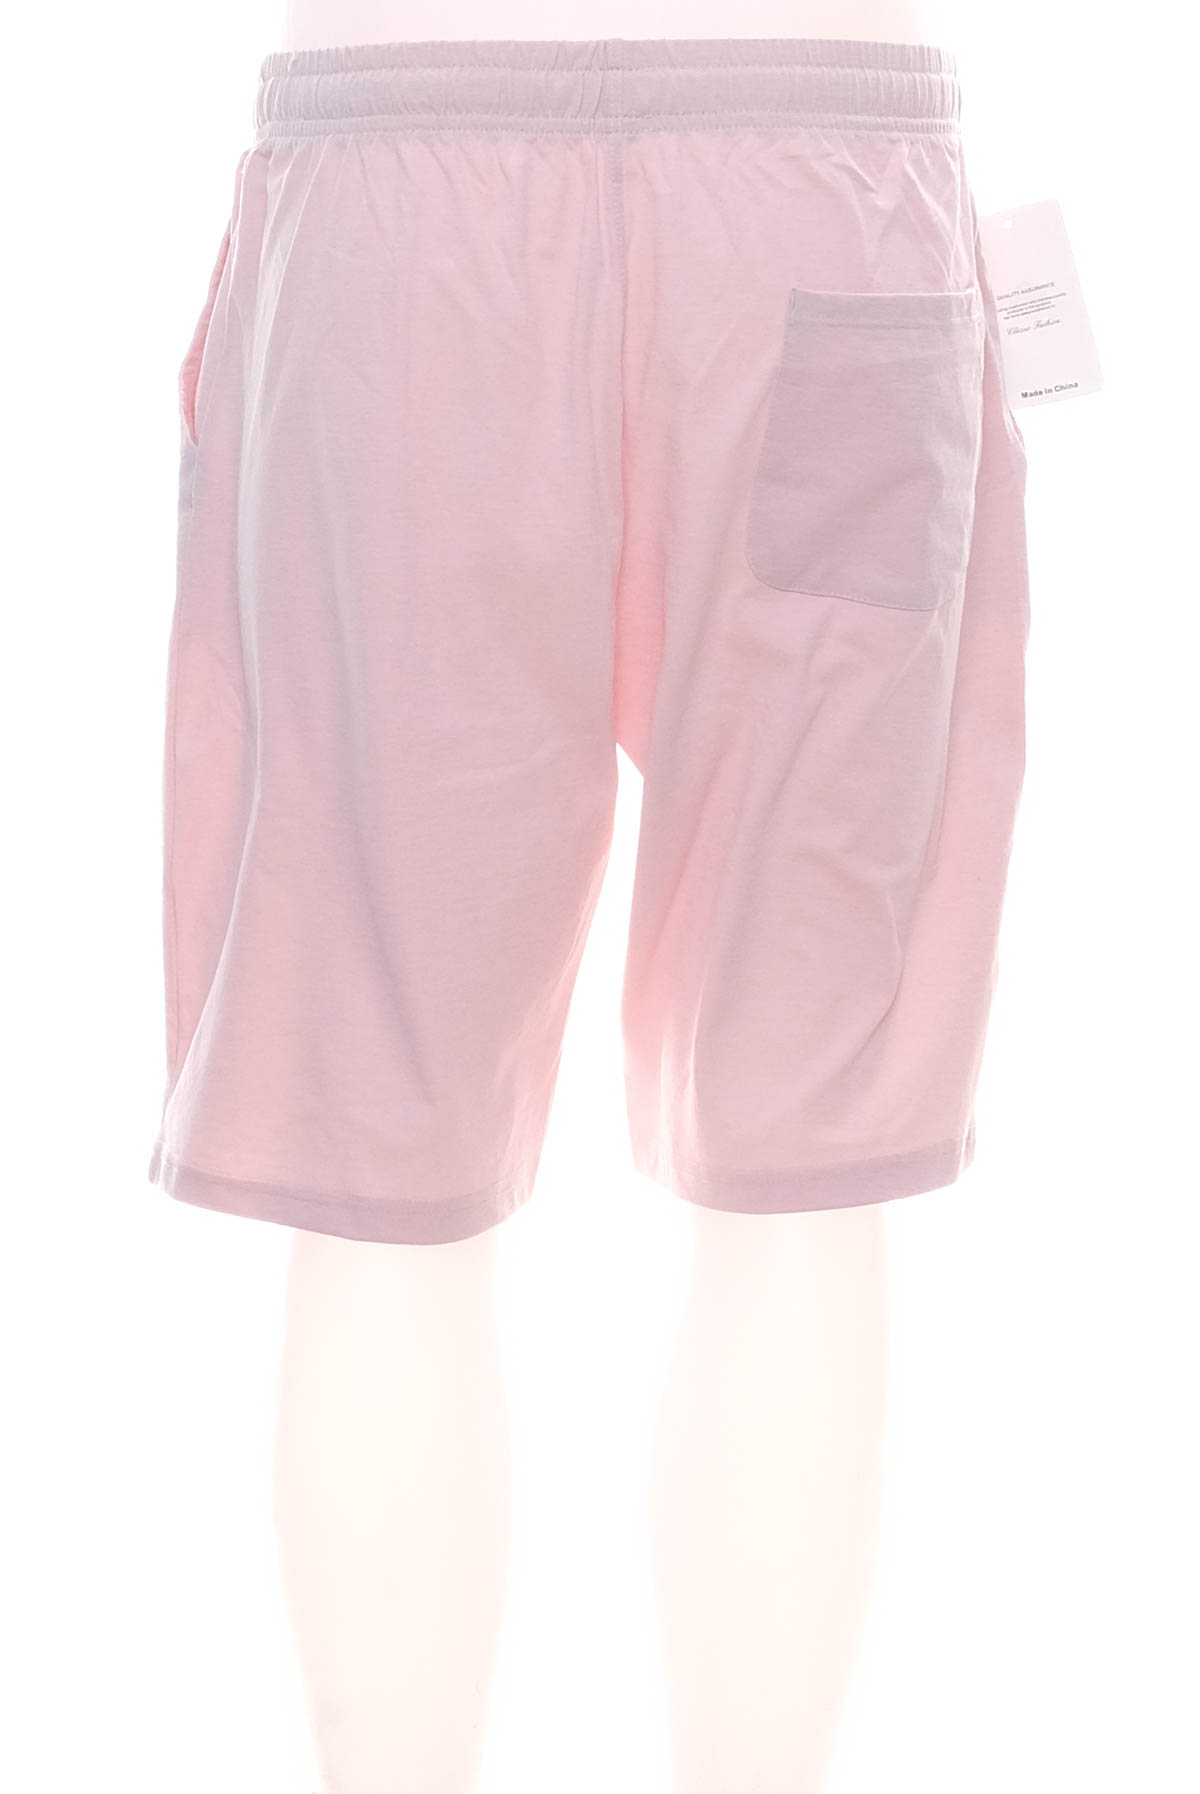 Men's shorts - LUCKYCACTUS - 1